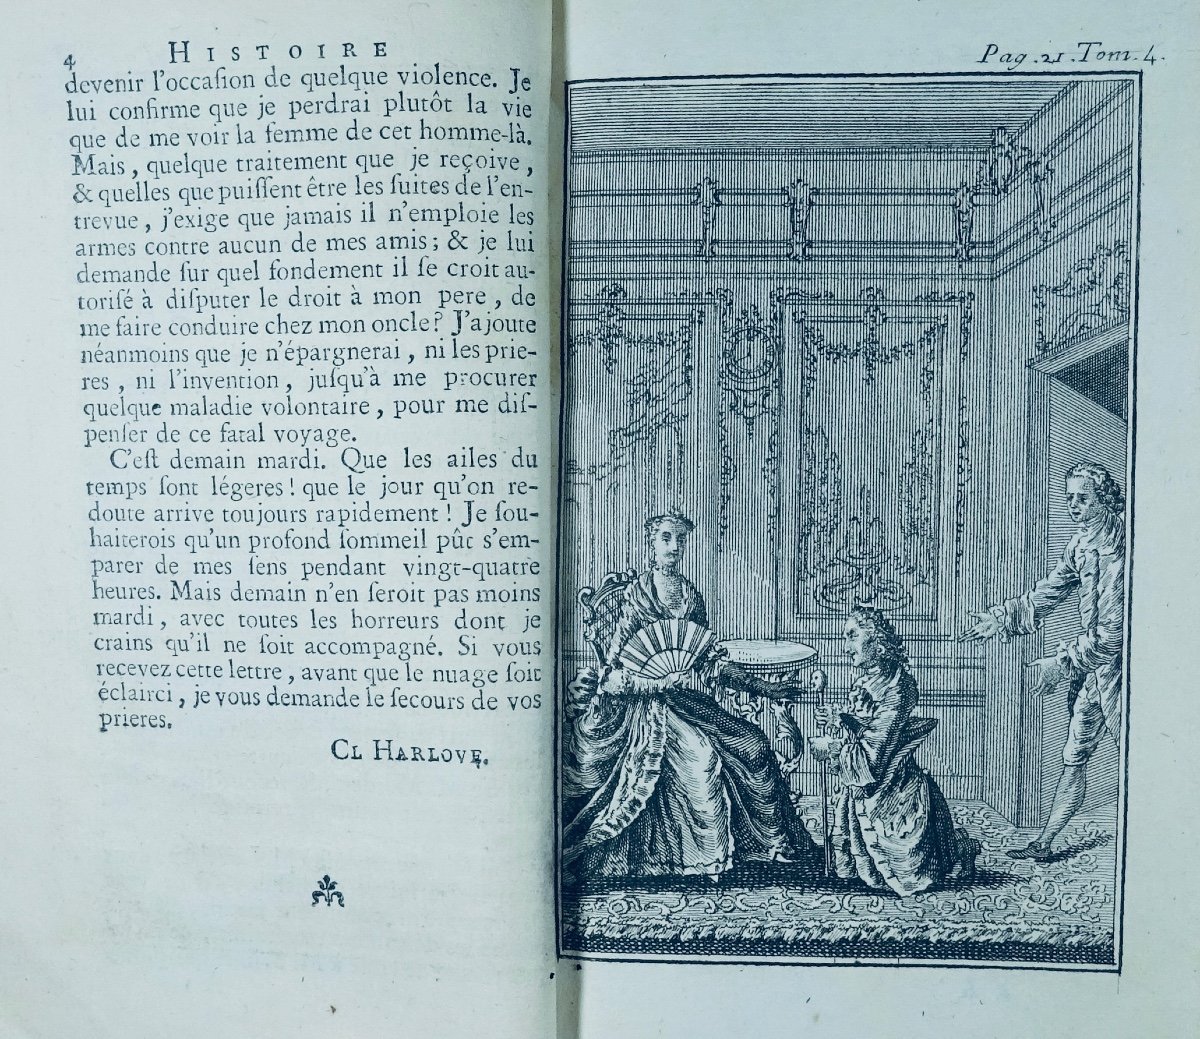 [richardson (samuel)] - English Letters, Or History Of Miss Clarisse Harlowe. 1766.-photo-3